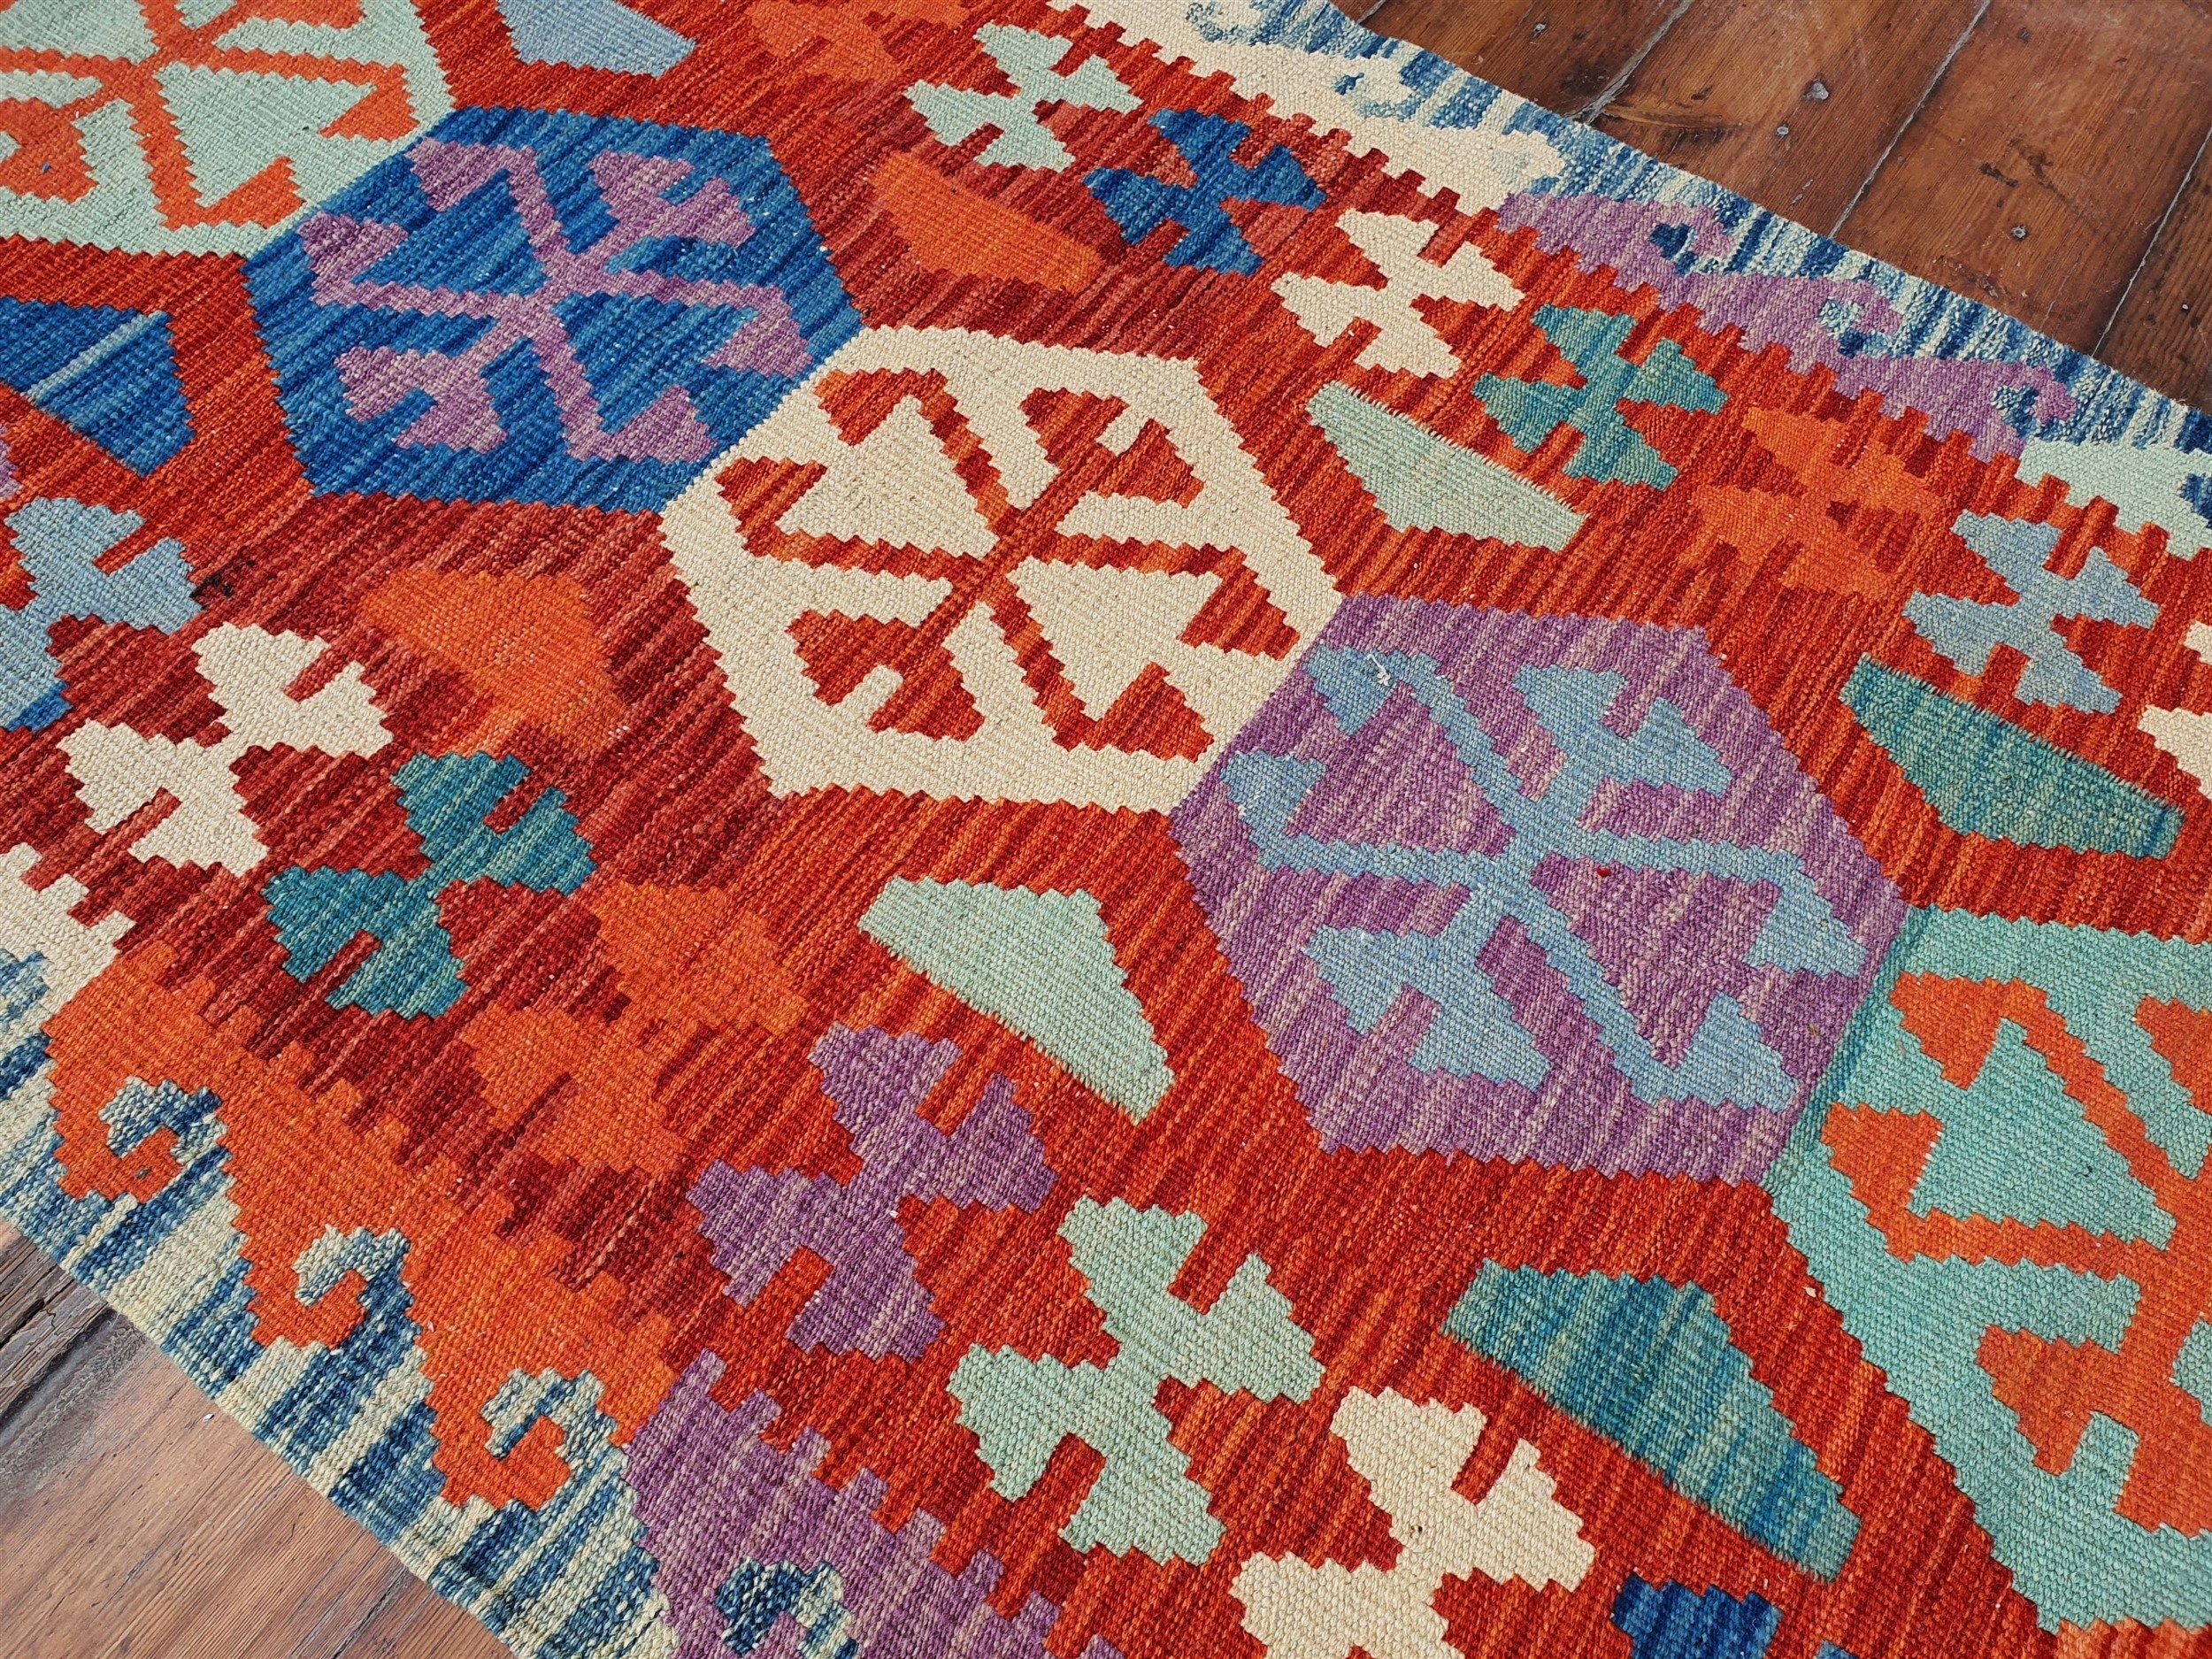 Vintage Kilim Runner Rug, 9'3" x 2'6" Afghan Hallway Kitchen Bedroom Rug, Moroccan Boho Rustic Persian Carpet Handmade Farmhouse Floor Decor